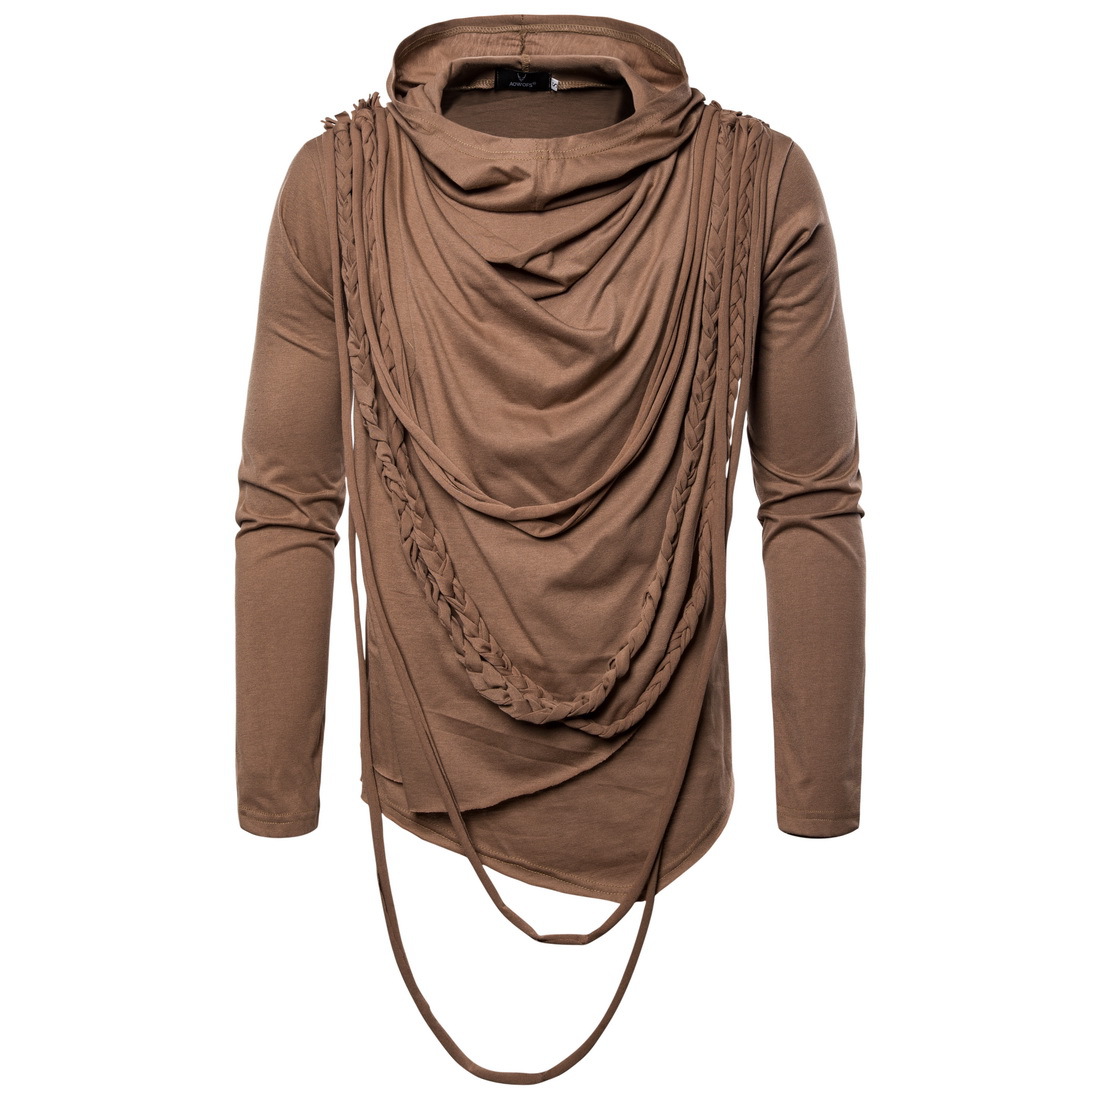 Fashion Spring Autumn Winter Clothing Trend Long-sleeved Pullovers Men T Shirt Tops Khkai